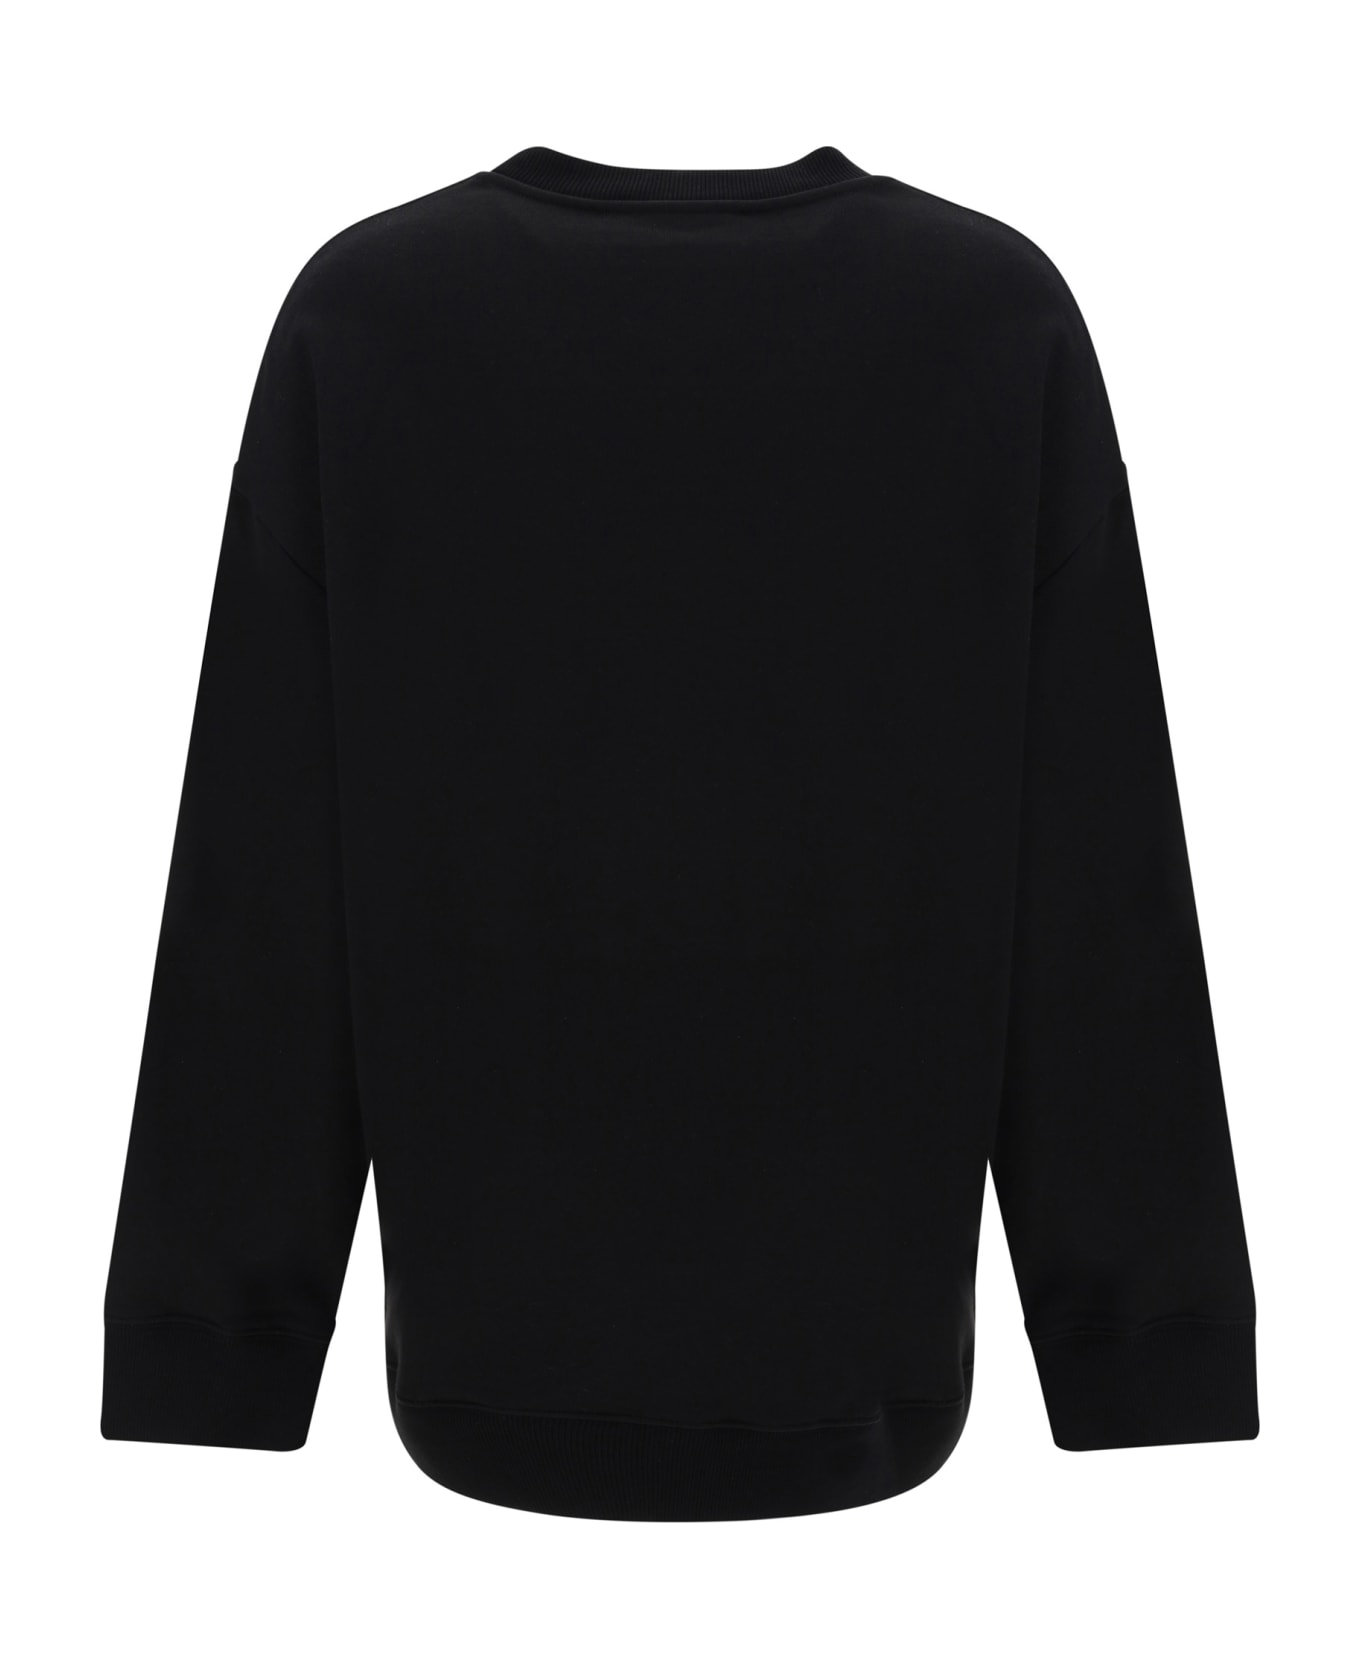 Stella McCartney Rhinestone Sweatshirt - Black